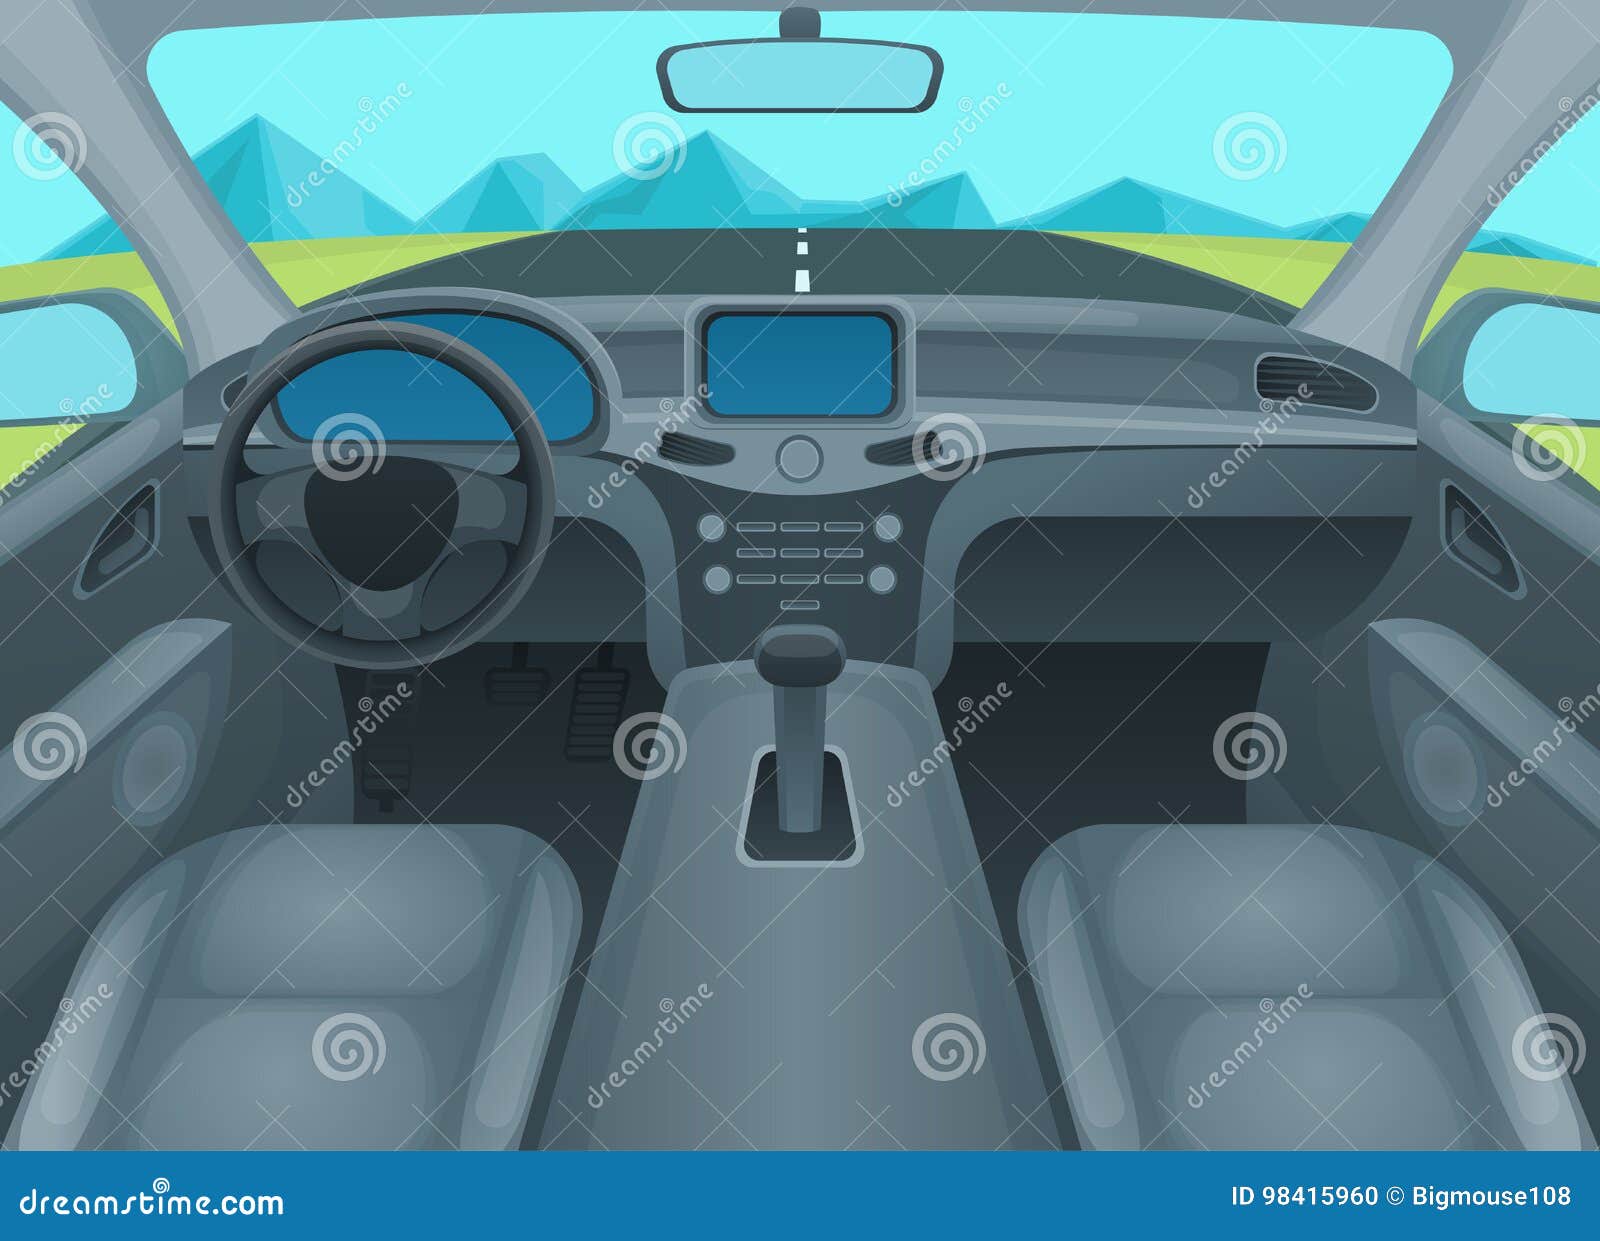 https://thumbs.dreamstime.com/z/inside-car-auto-interior-vector-comfort-cabin-wheel-view-road-window-illustration-98415960.jpg